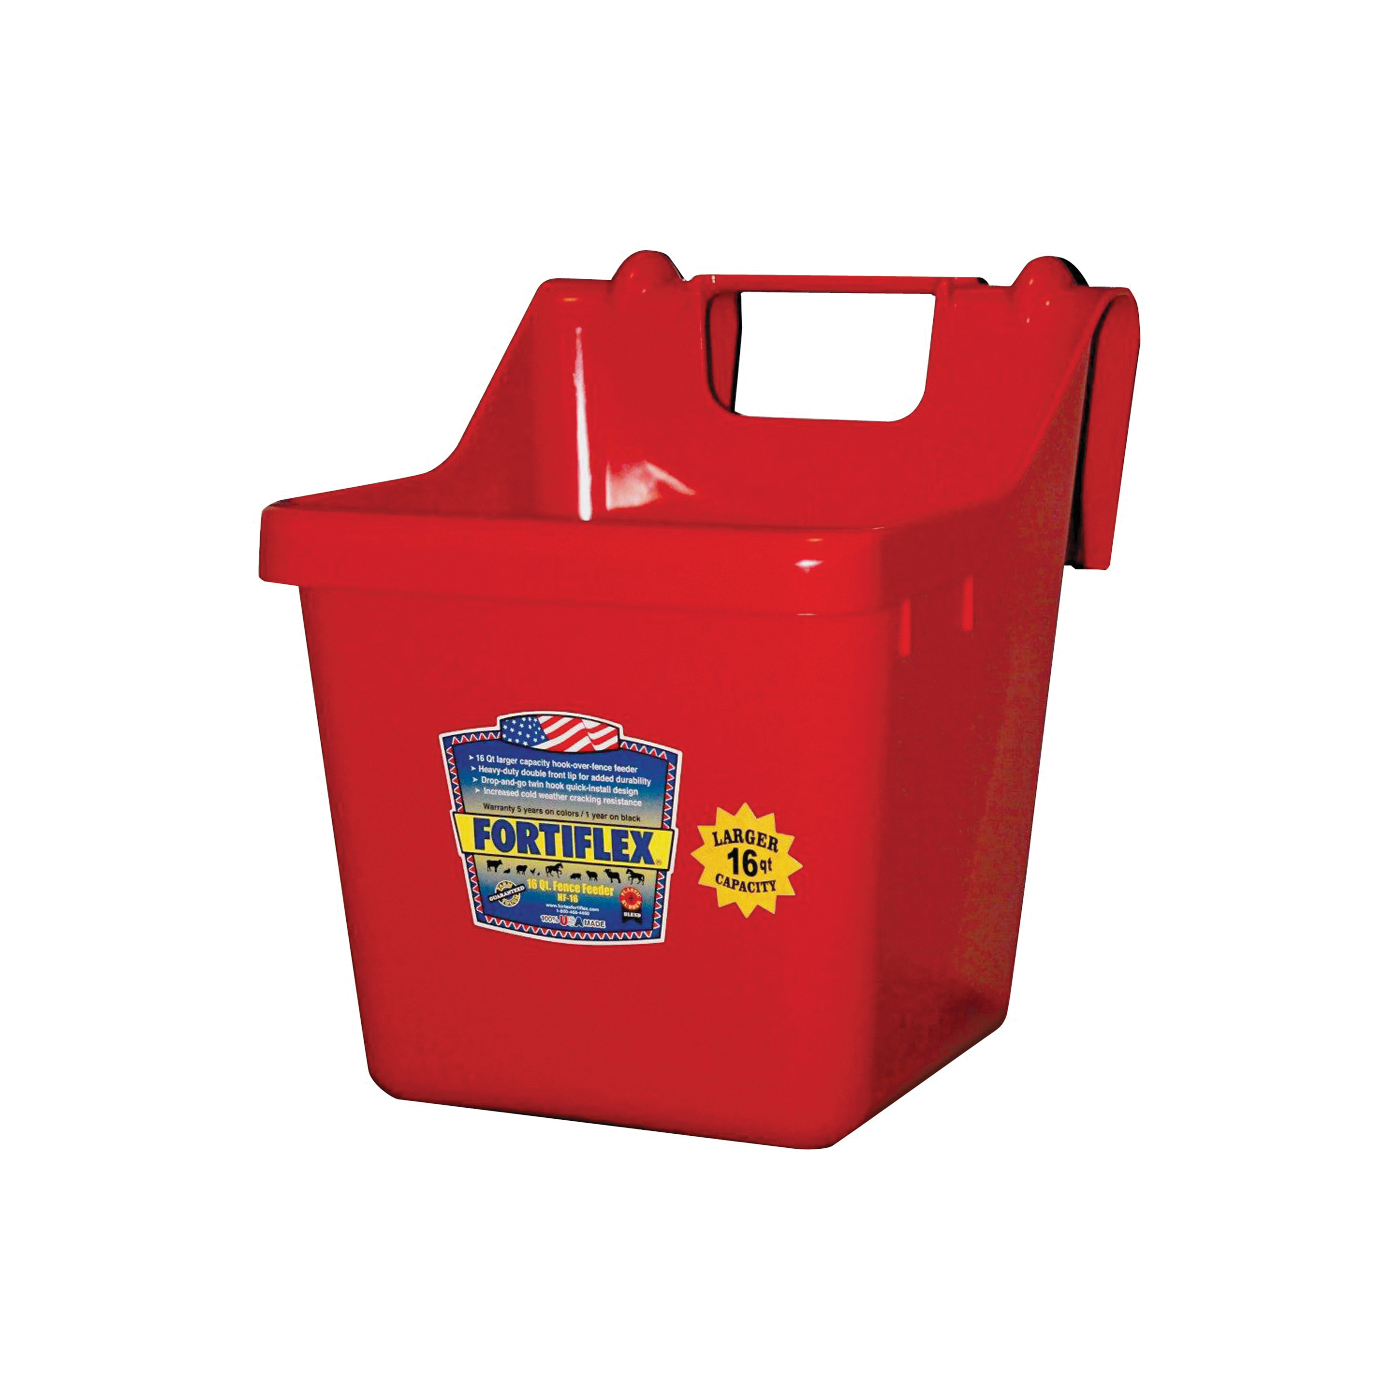 1301602 Bucket Feeder, 16 qt Volume, Fortalloy Rubber Polymer, Red